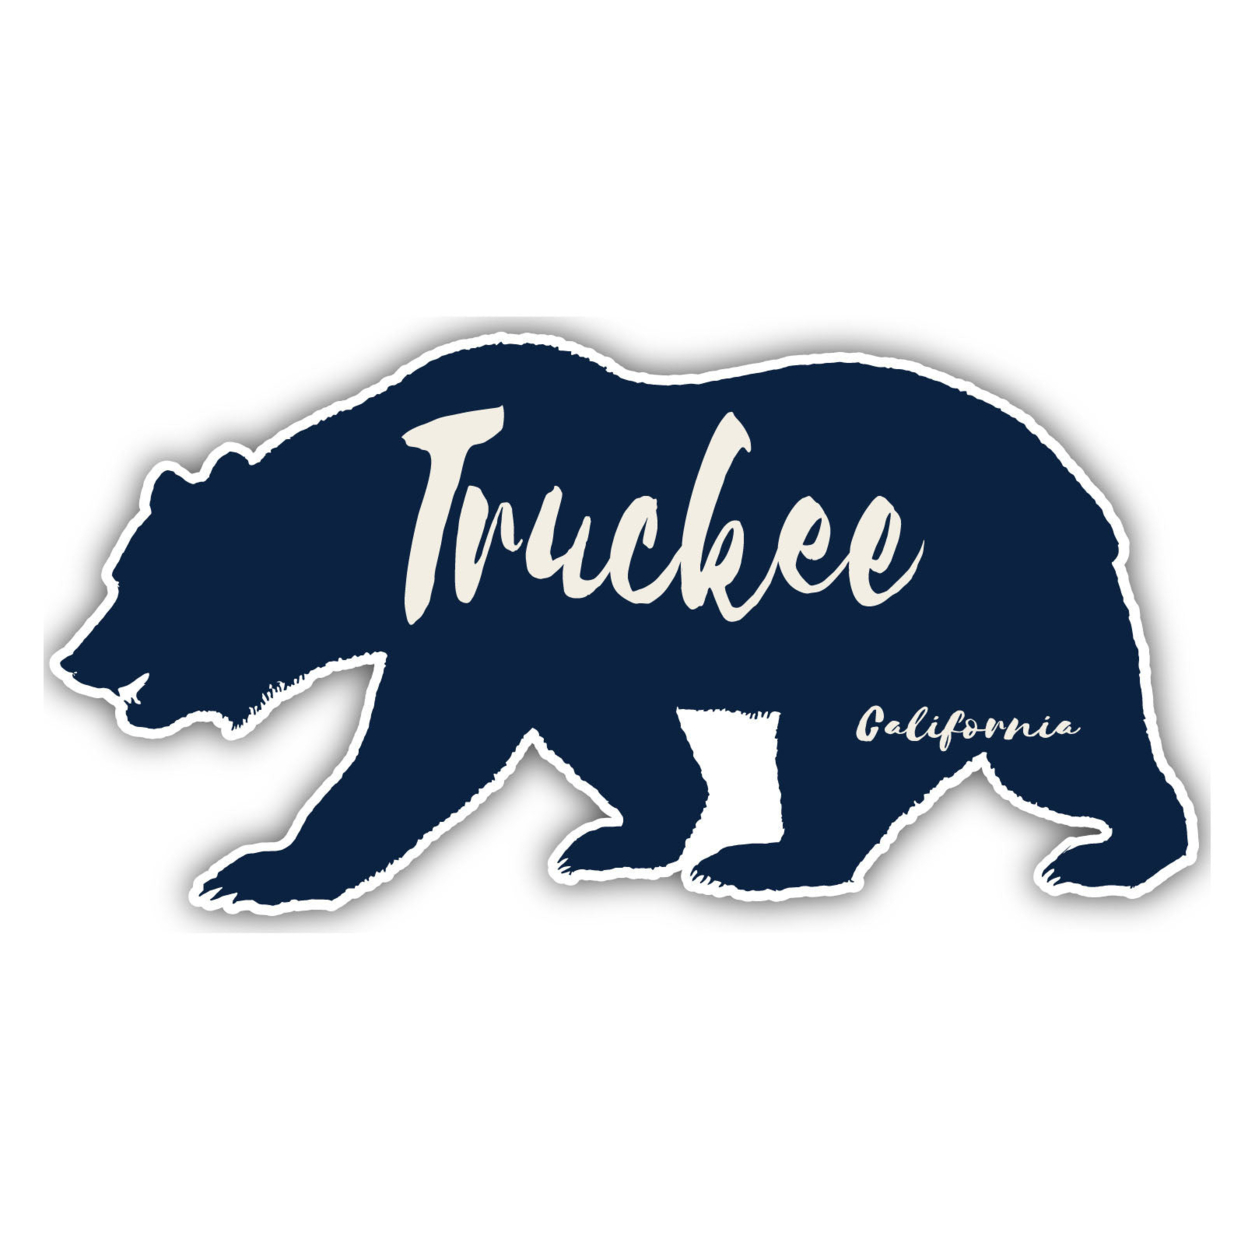 Truckee California Souvenir Decorative Stickers (Choose Theme And Size) - Single Unit, 4-Inch, Tent